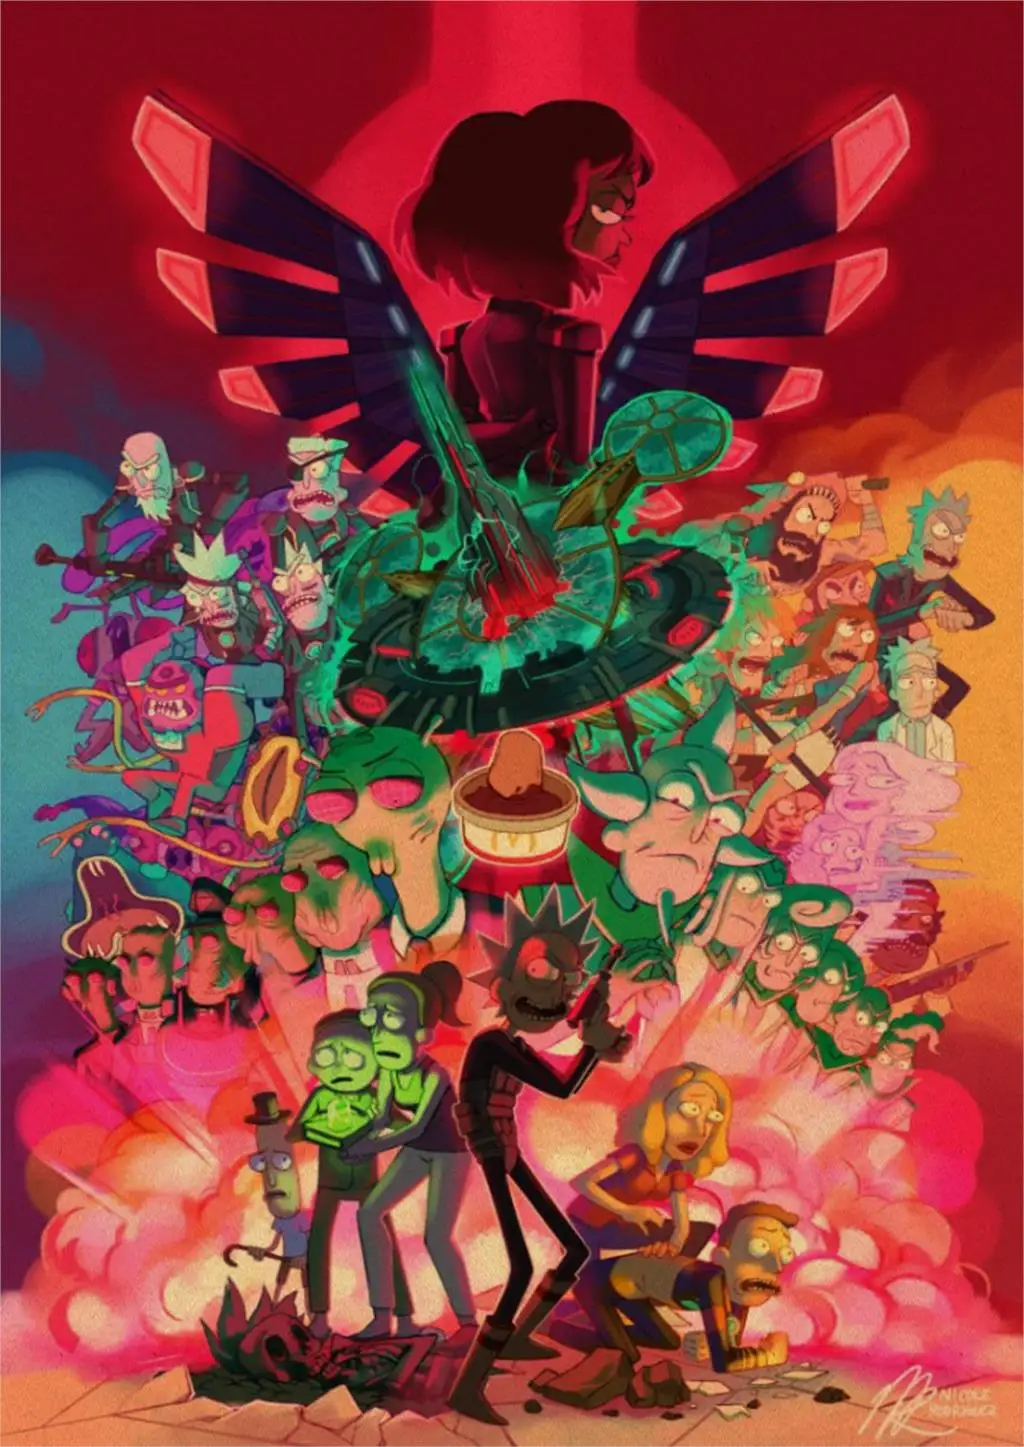 Мультфильм плакат с героями аниме Рик и Моти плакат, плакат в стиле ретро плакат на крафт-бумаге Спальня бар украшения плакат - Цвет: 11